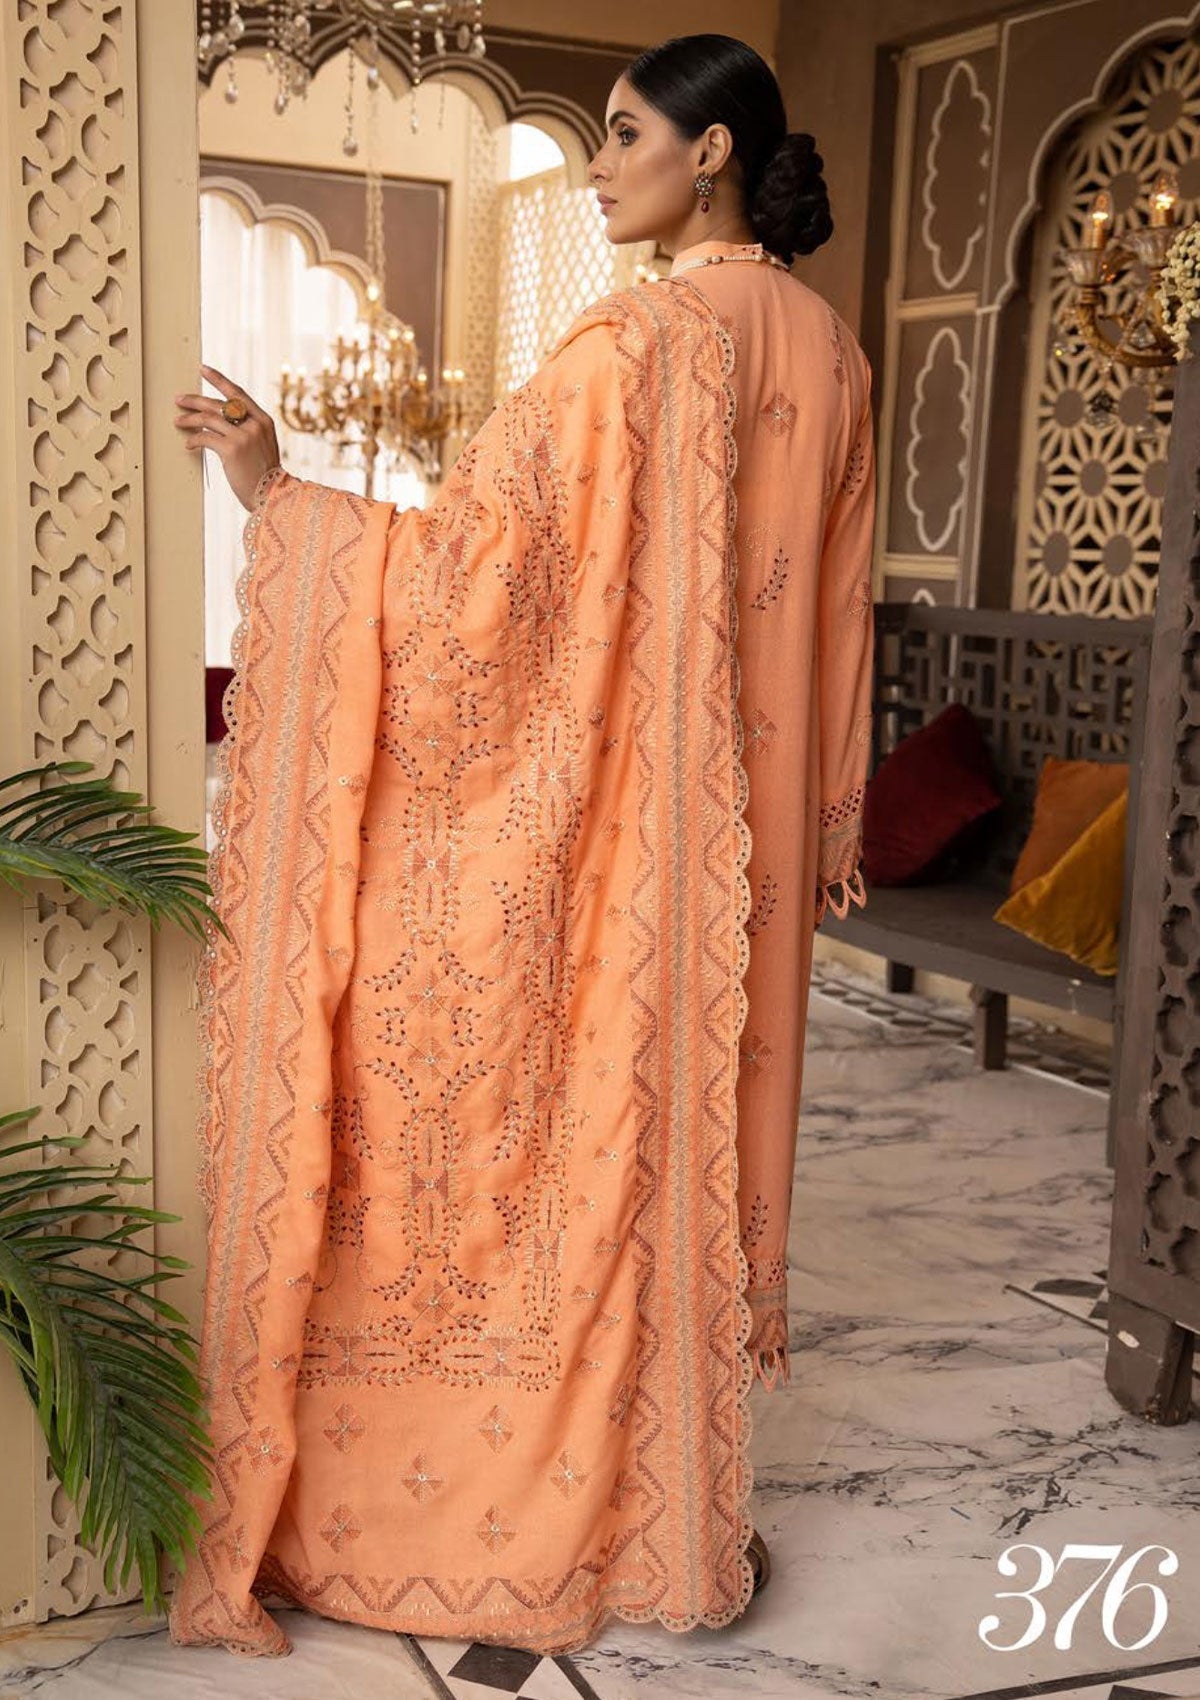 Winter Collection - Shaista - Khoobseerat - Karandi - SKK#376 available at Saleem Fabrics Traditions